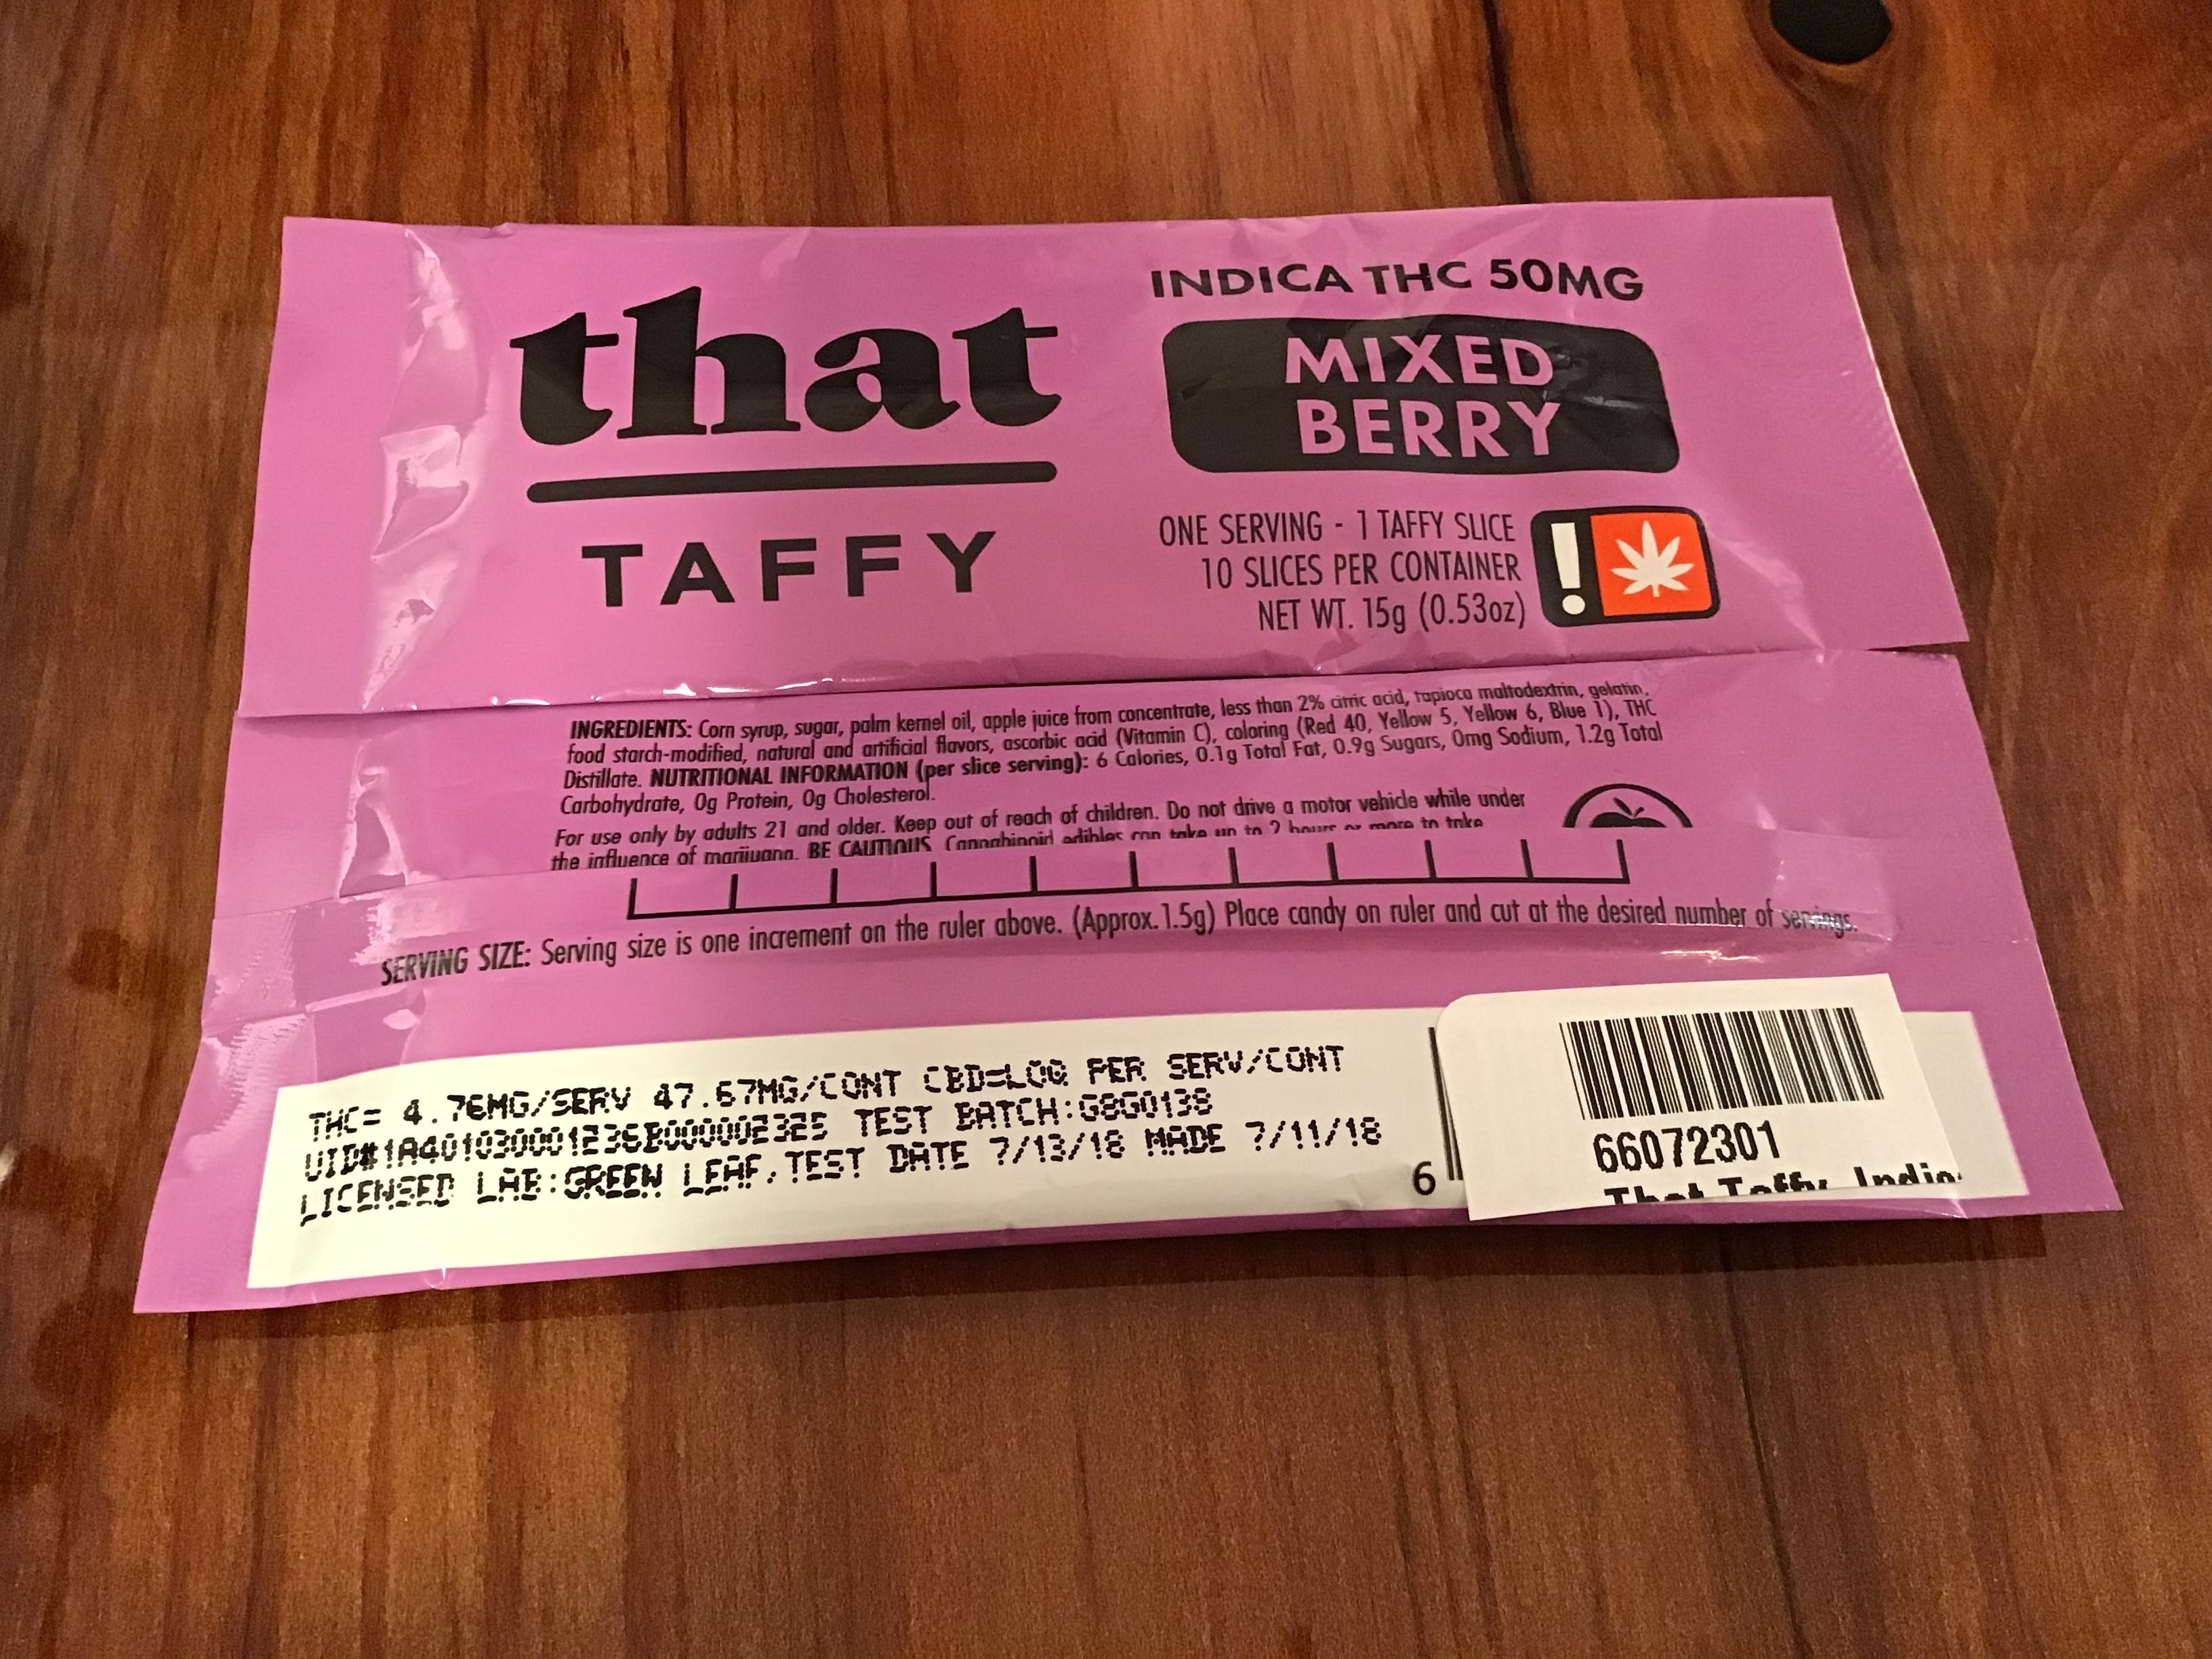 edible-that-taffy-indica